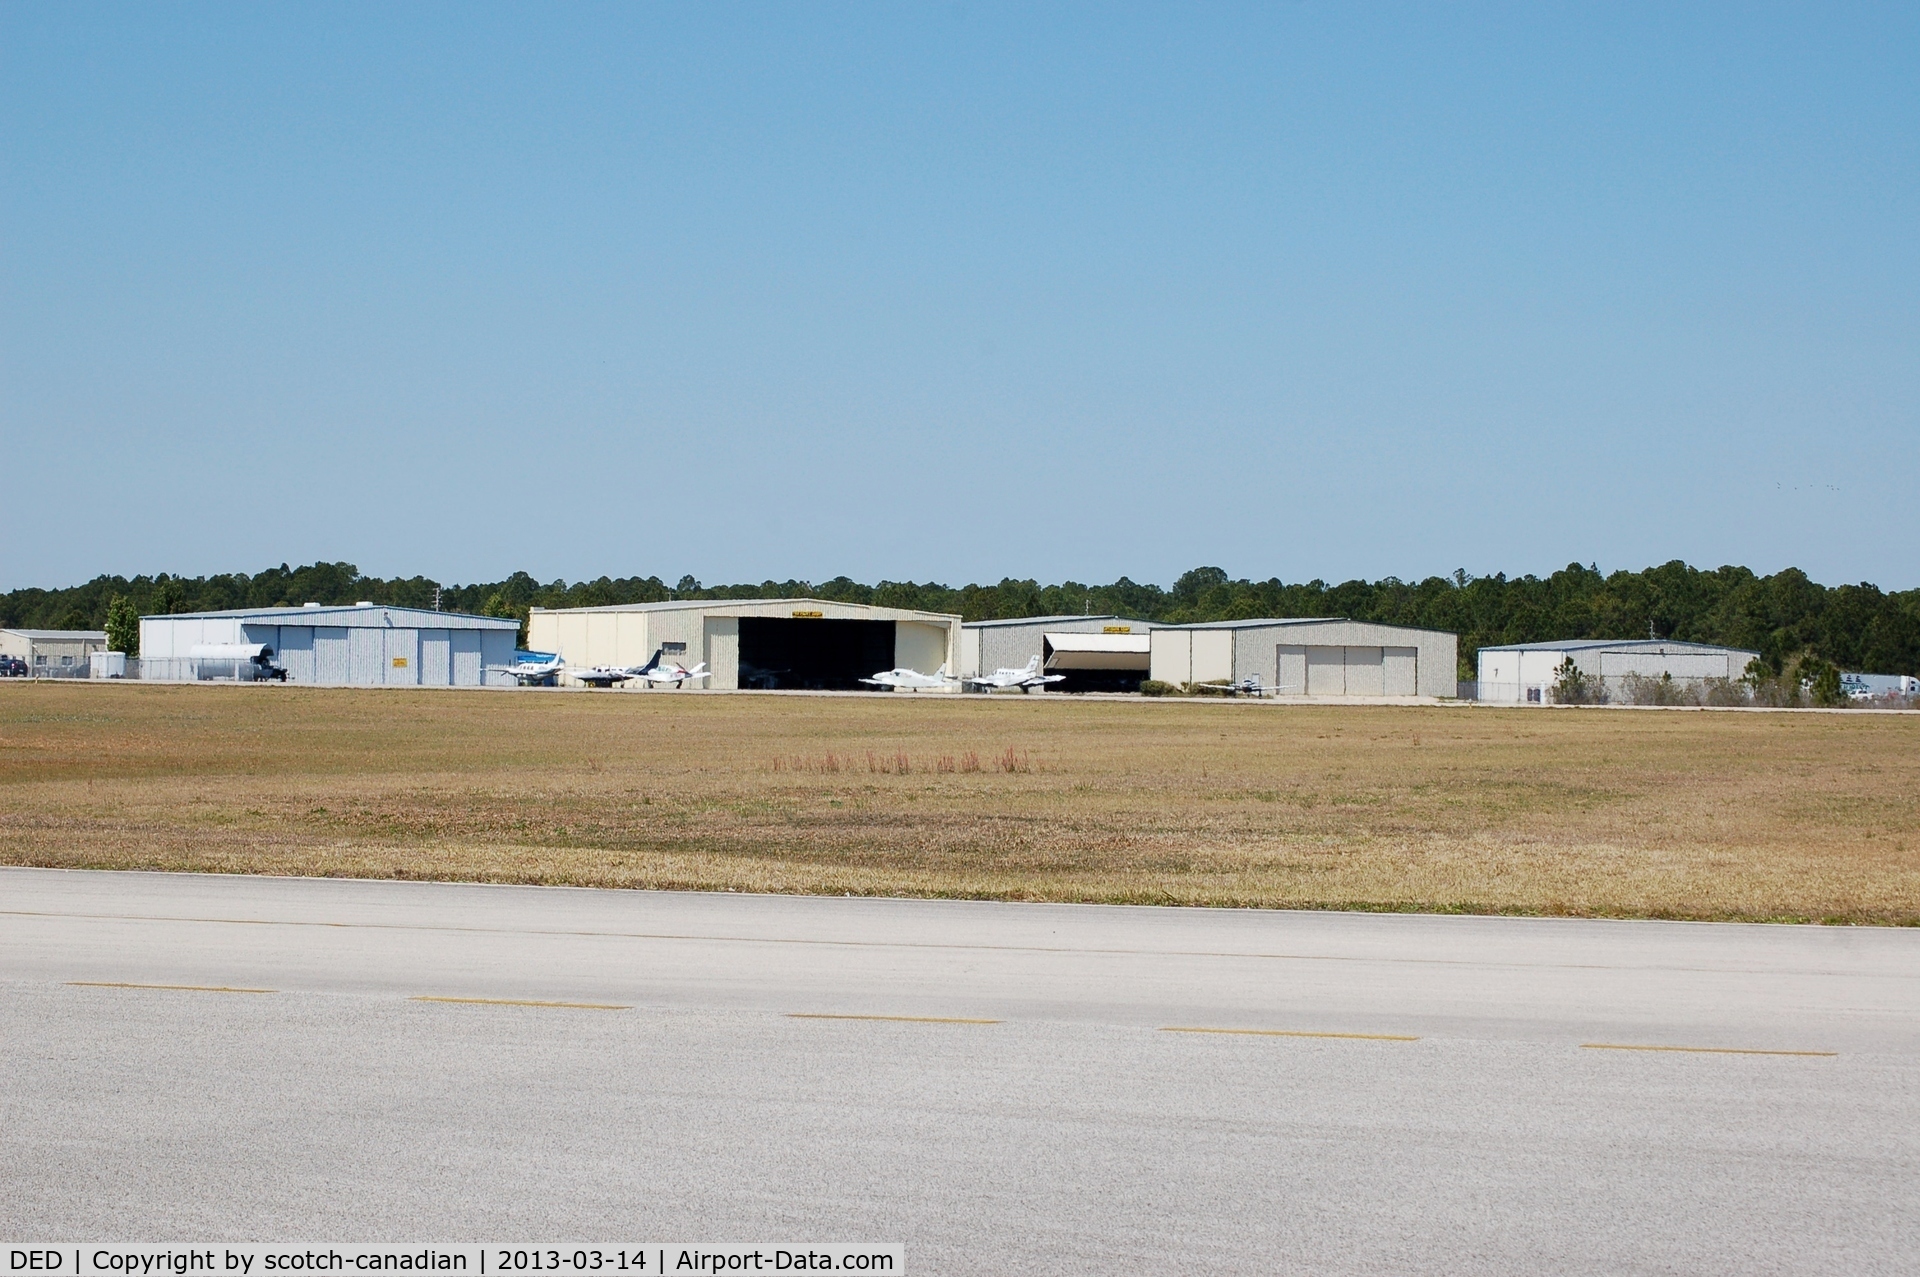 Deland Muni-sidney H Taylor Field Airport (DED) - General Aviation Hangars at DeLand Municipal - Sidney H. Taylor Field, DeLand, FL  